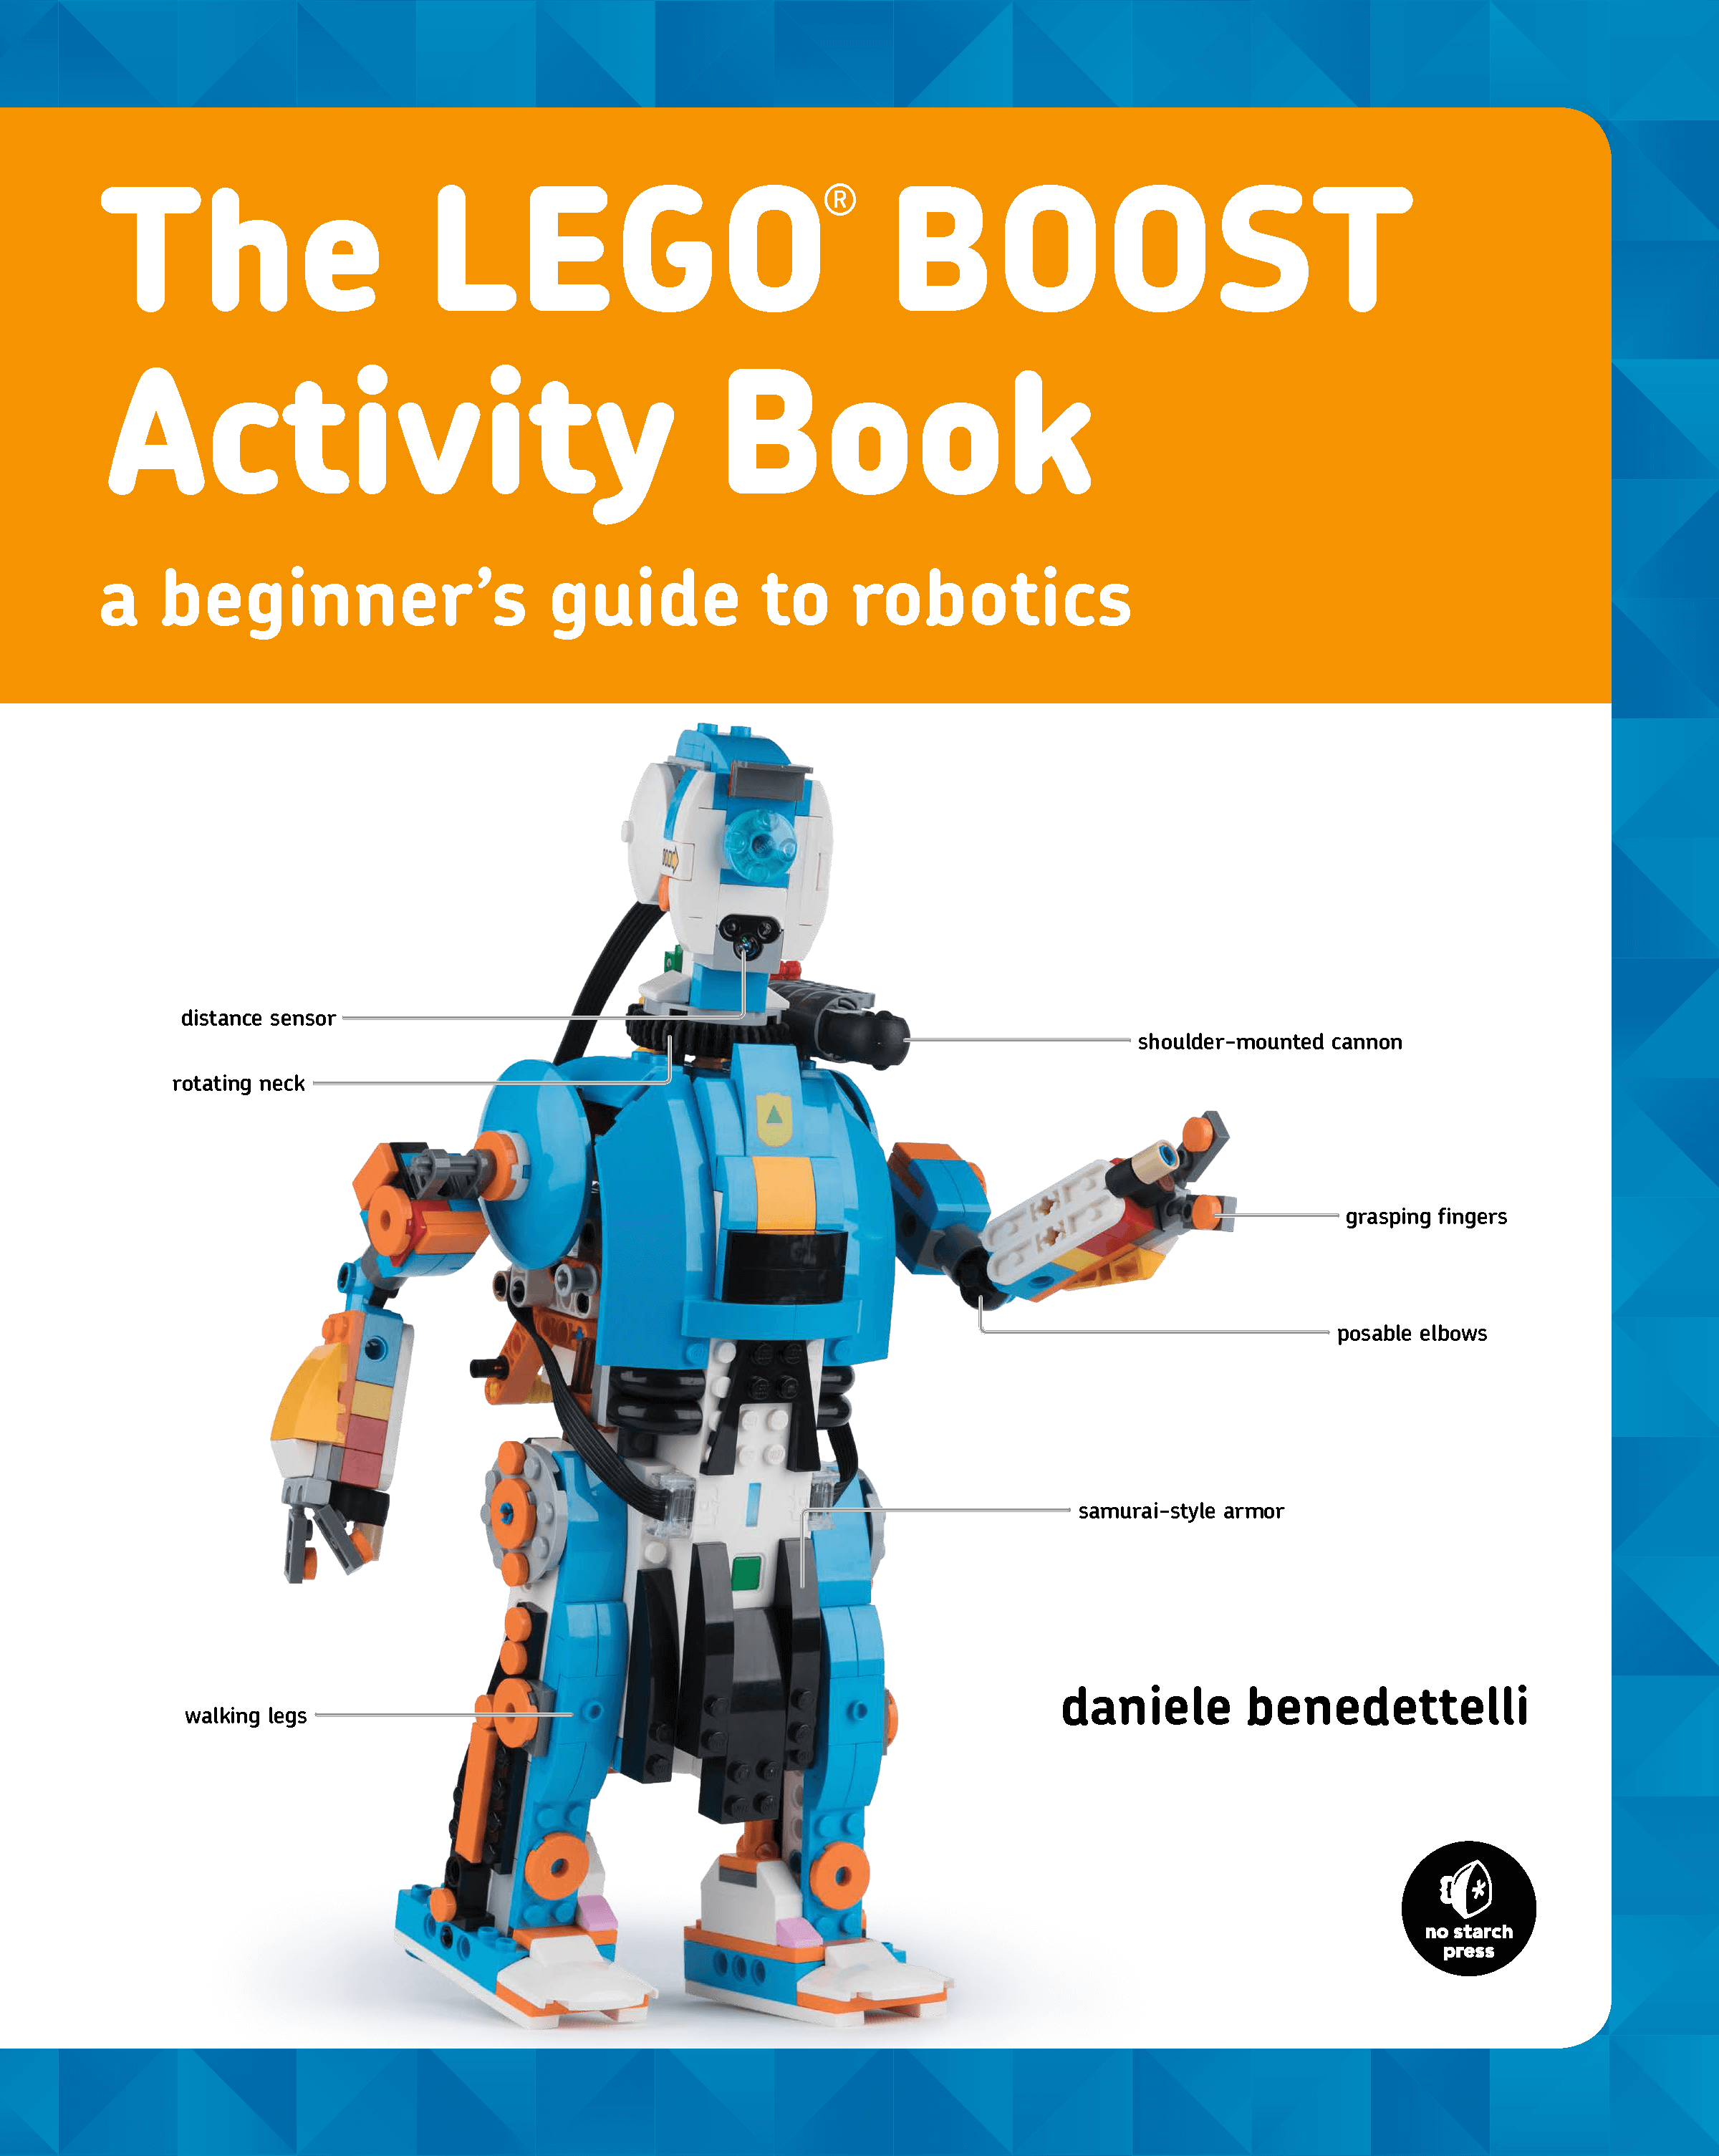 genvinde kontroversiel Spille computerspil The LEGO BOOST Activity Book | No Starch Press